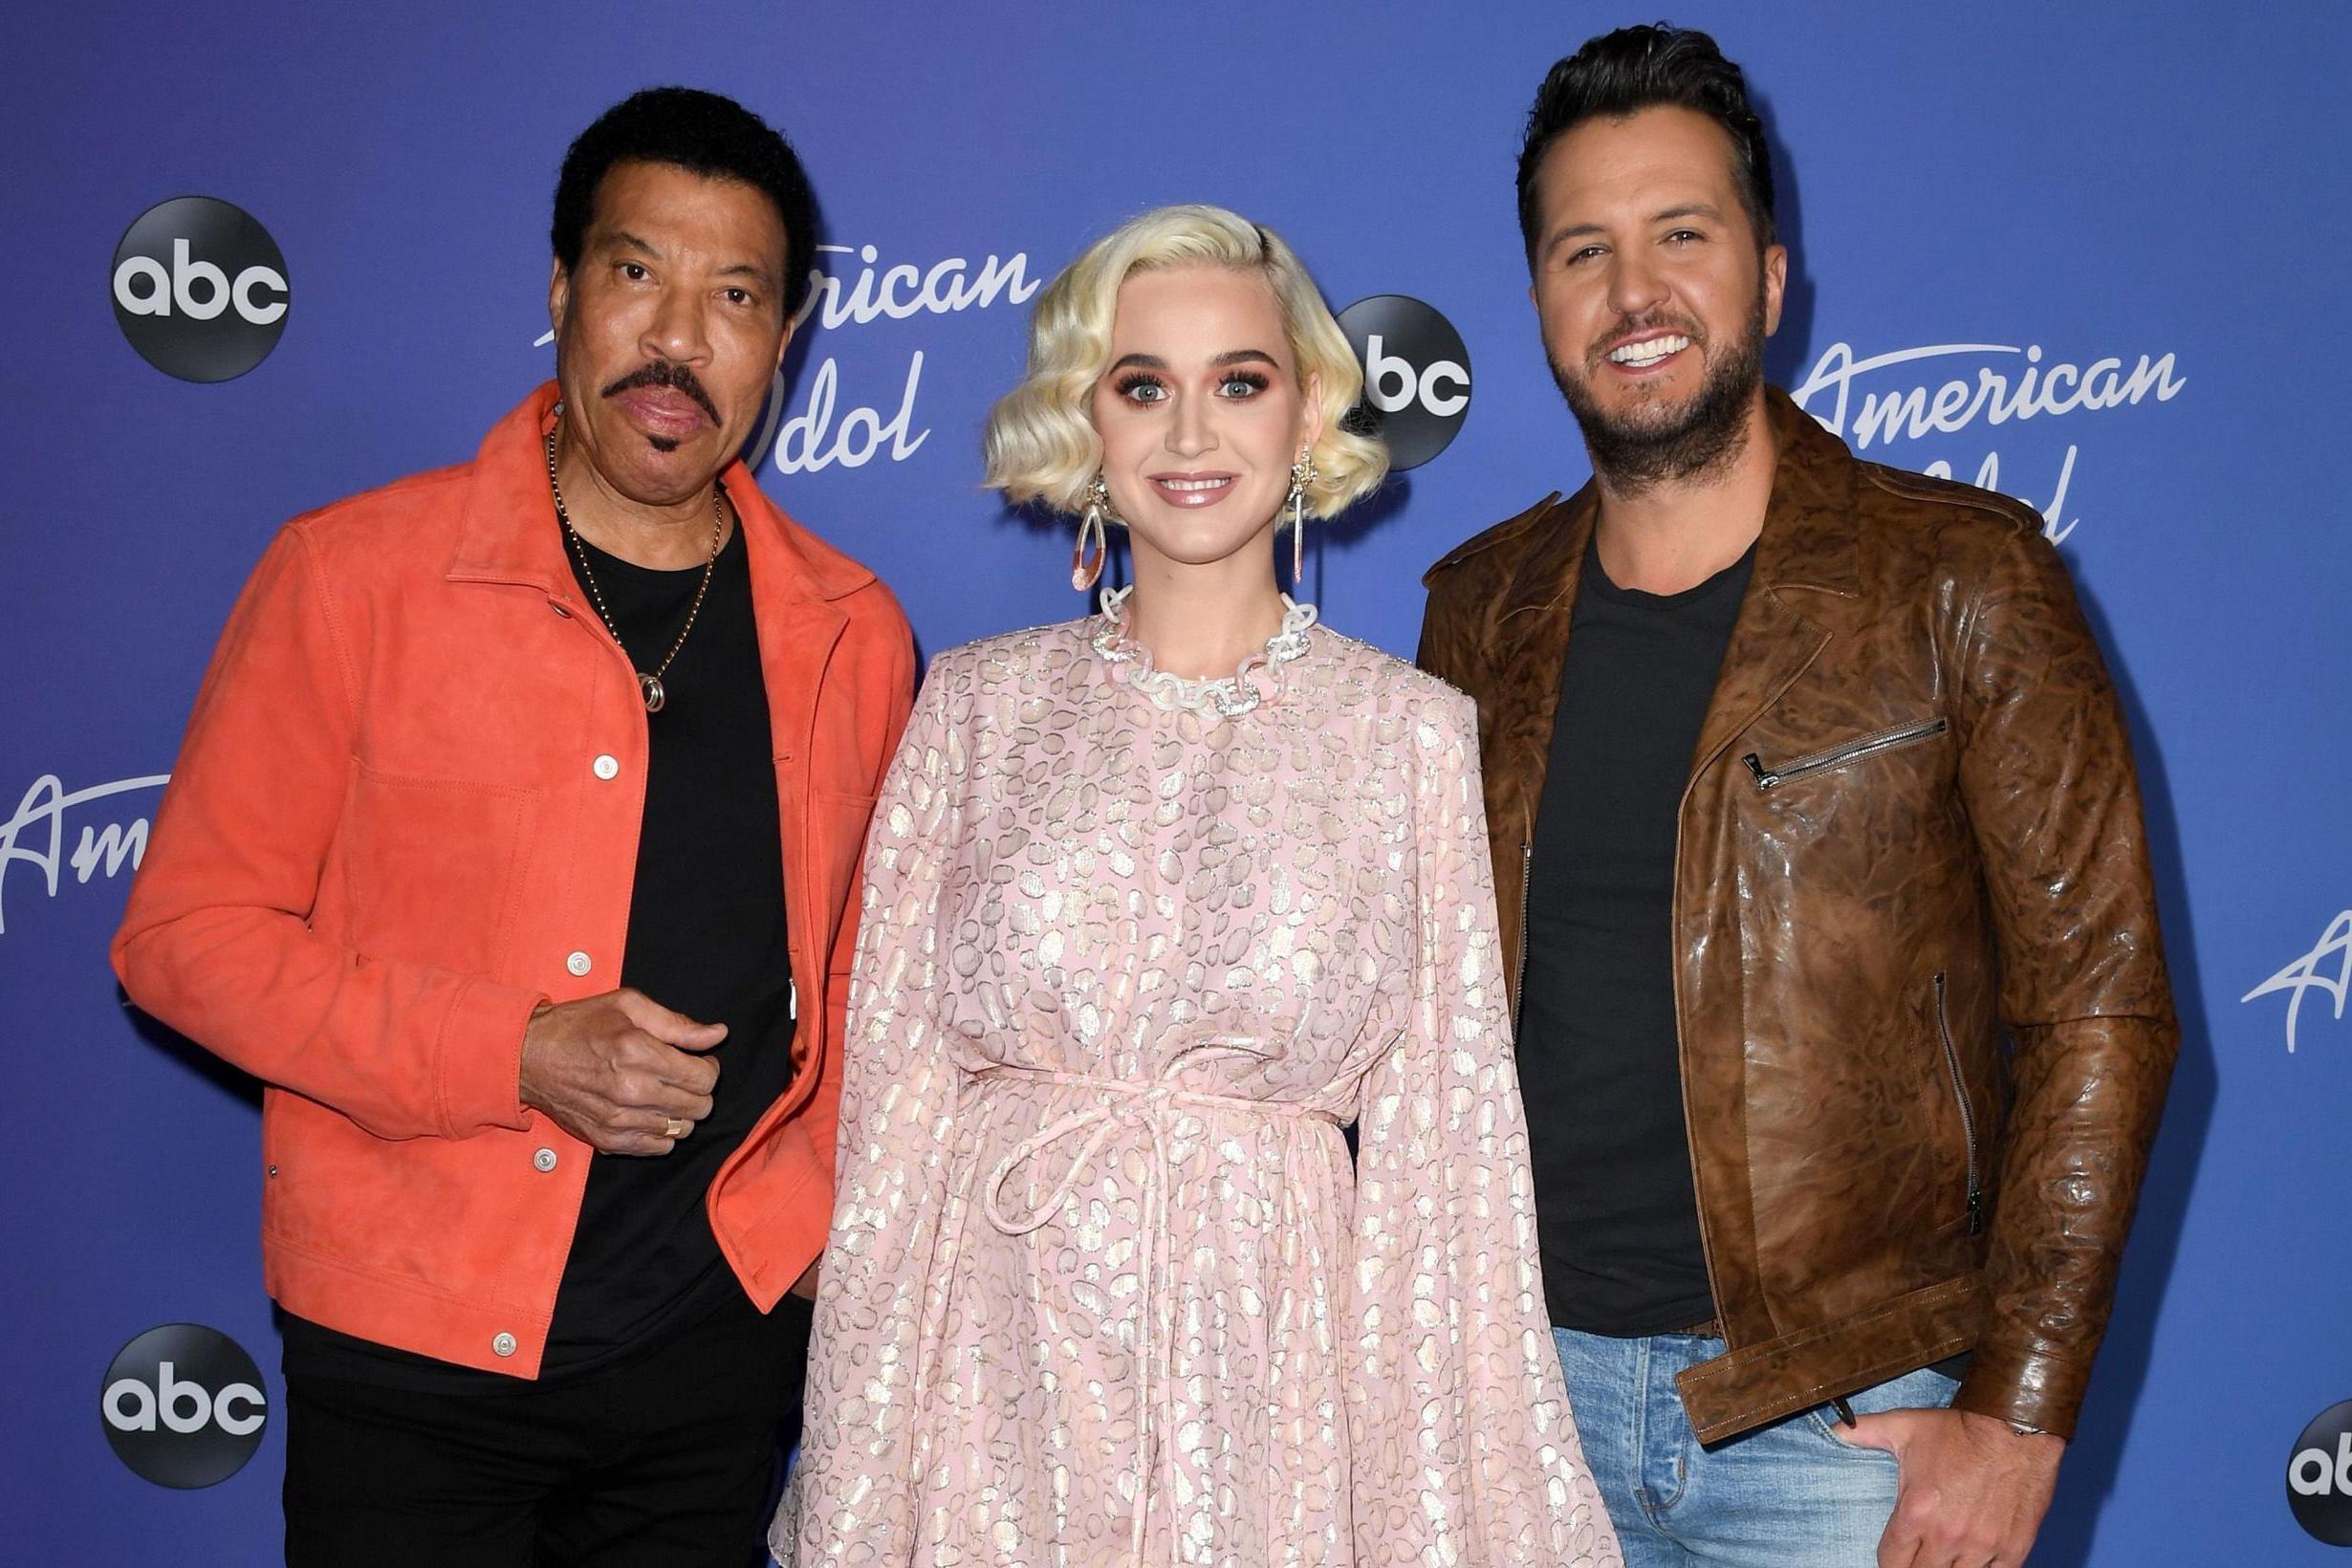 American Idol to continue despite coronavirus with contestants